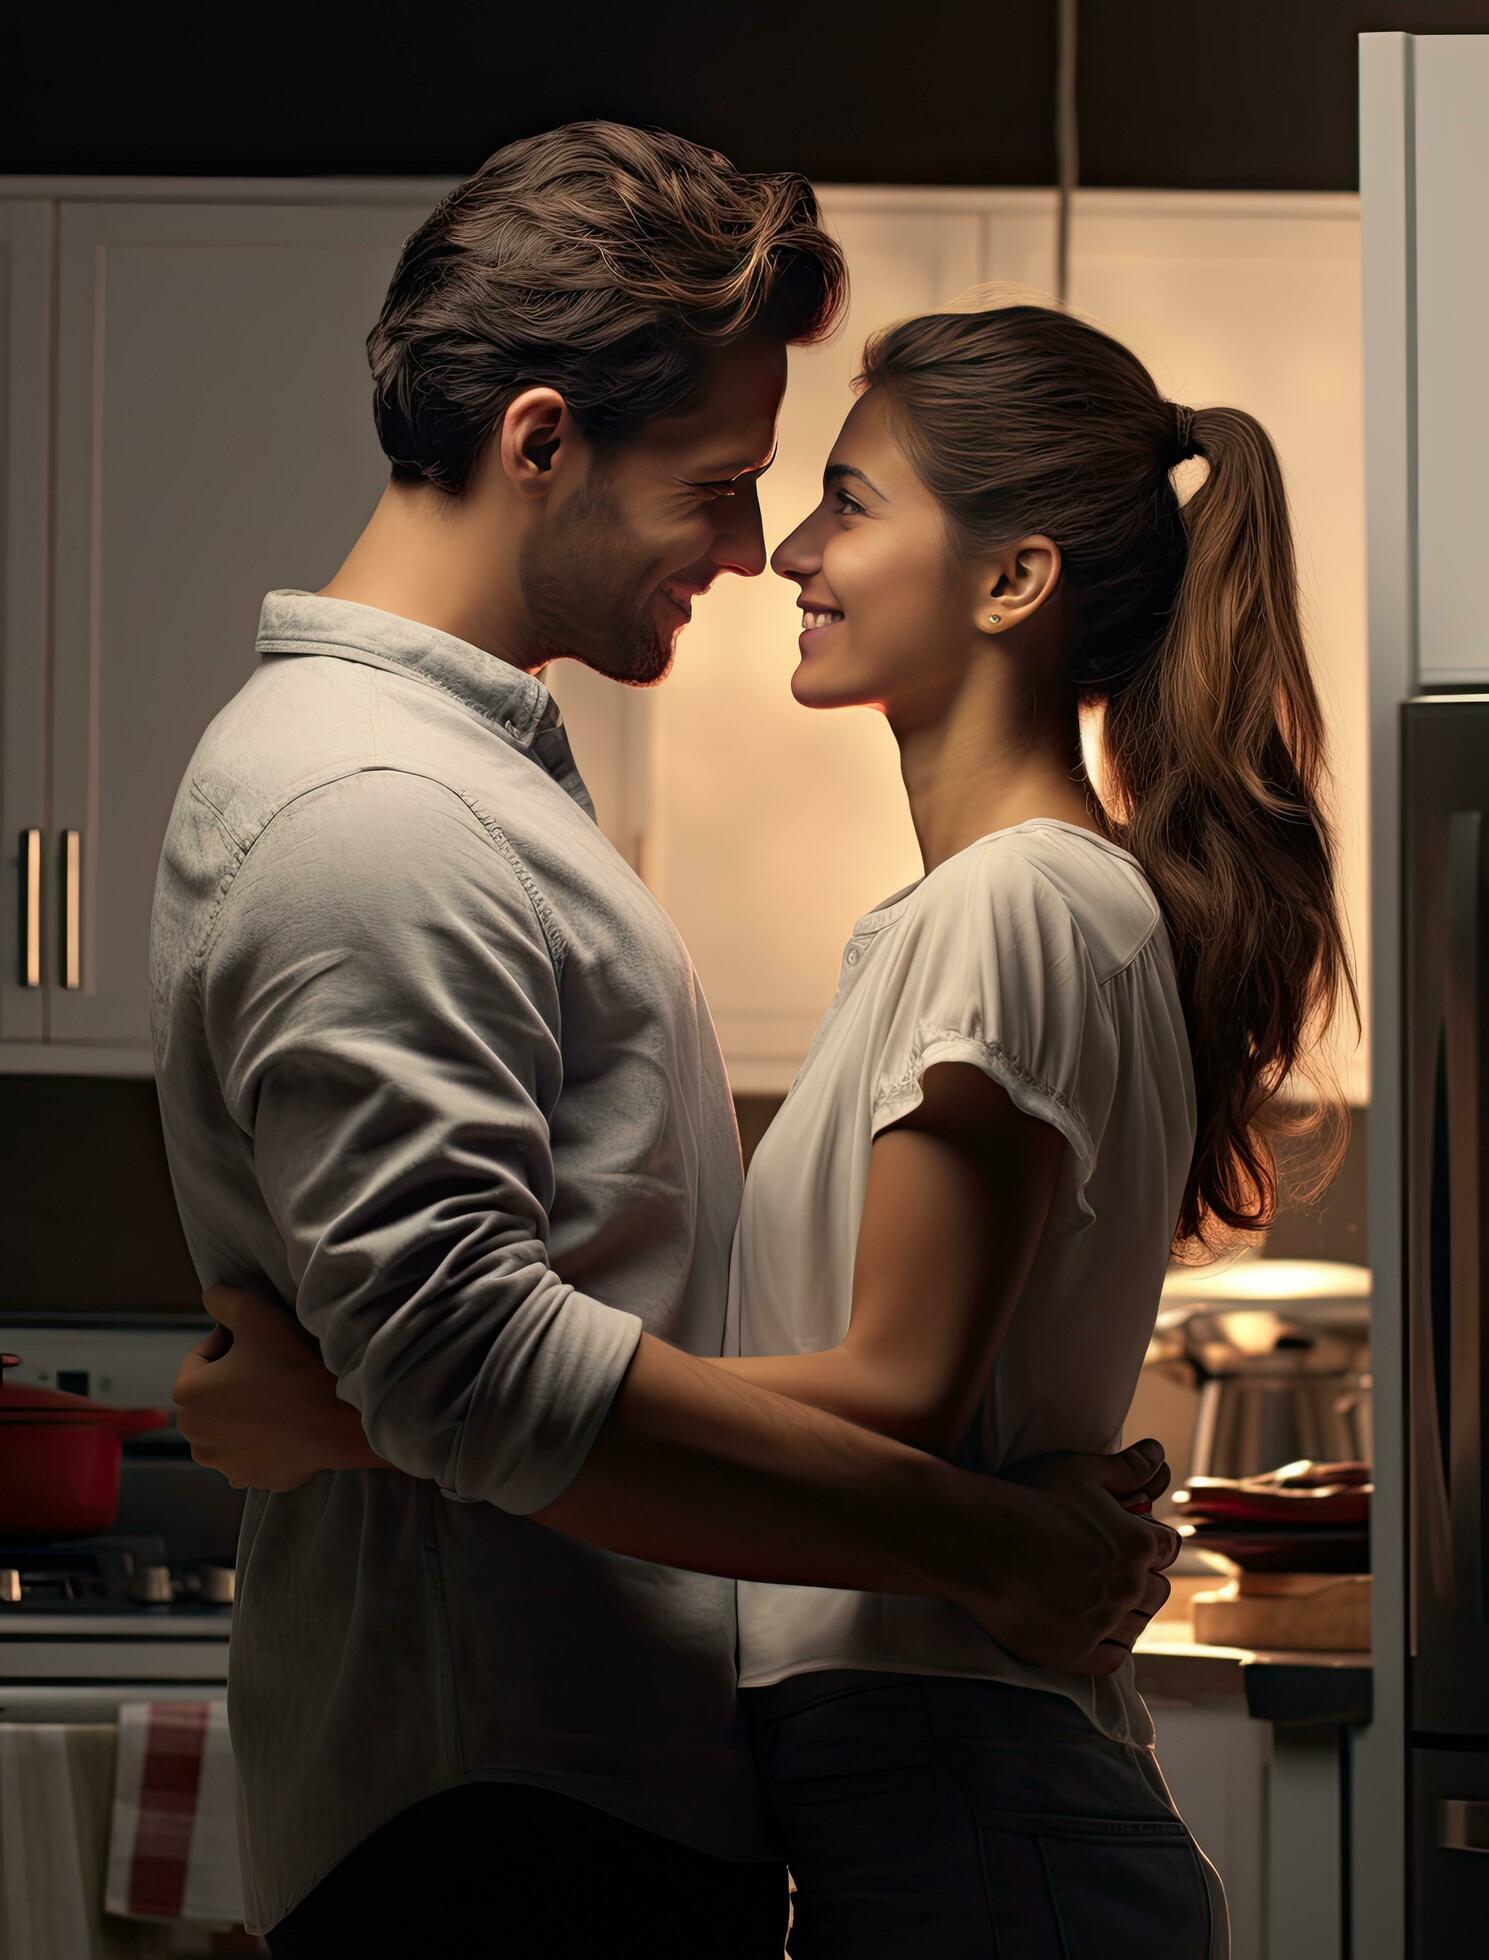 Minimal waist up portrait of affectionate couple in kitchen gazing